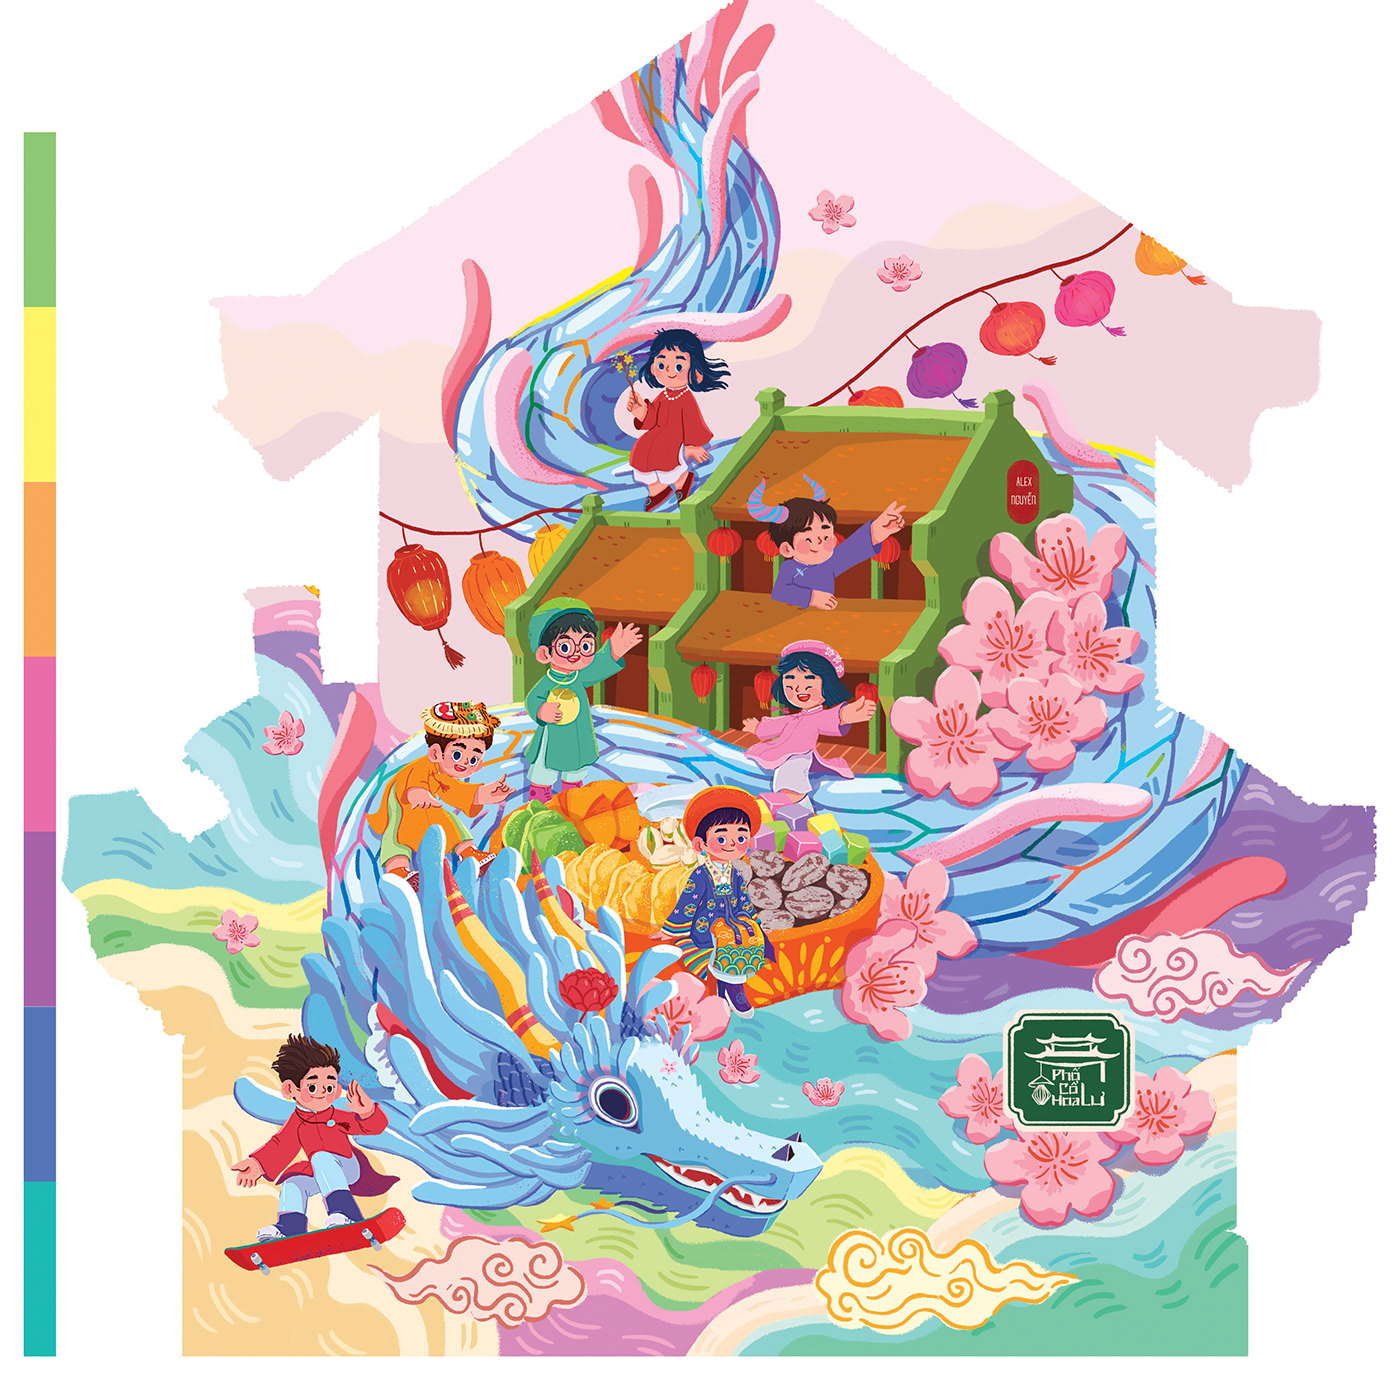 ILLUSTRATION  mural art ninh binh vietnam tet Lunar New Year 2024design dragon Hoa Lu Tet festival in Vietnam